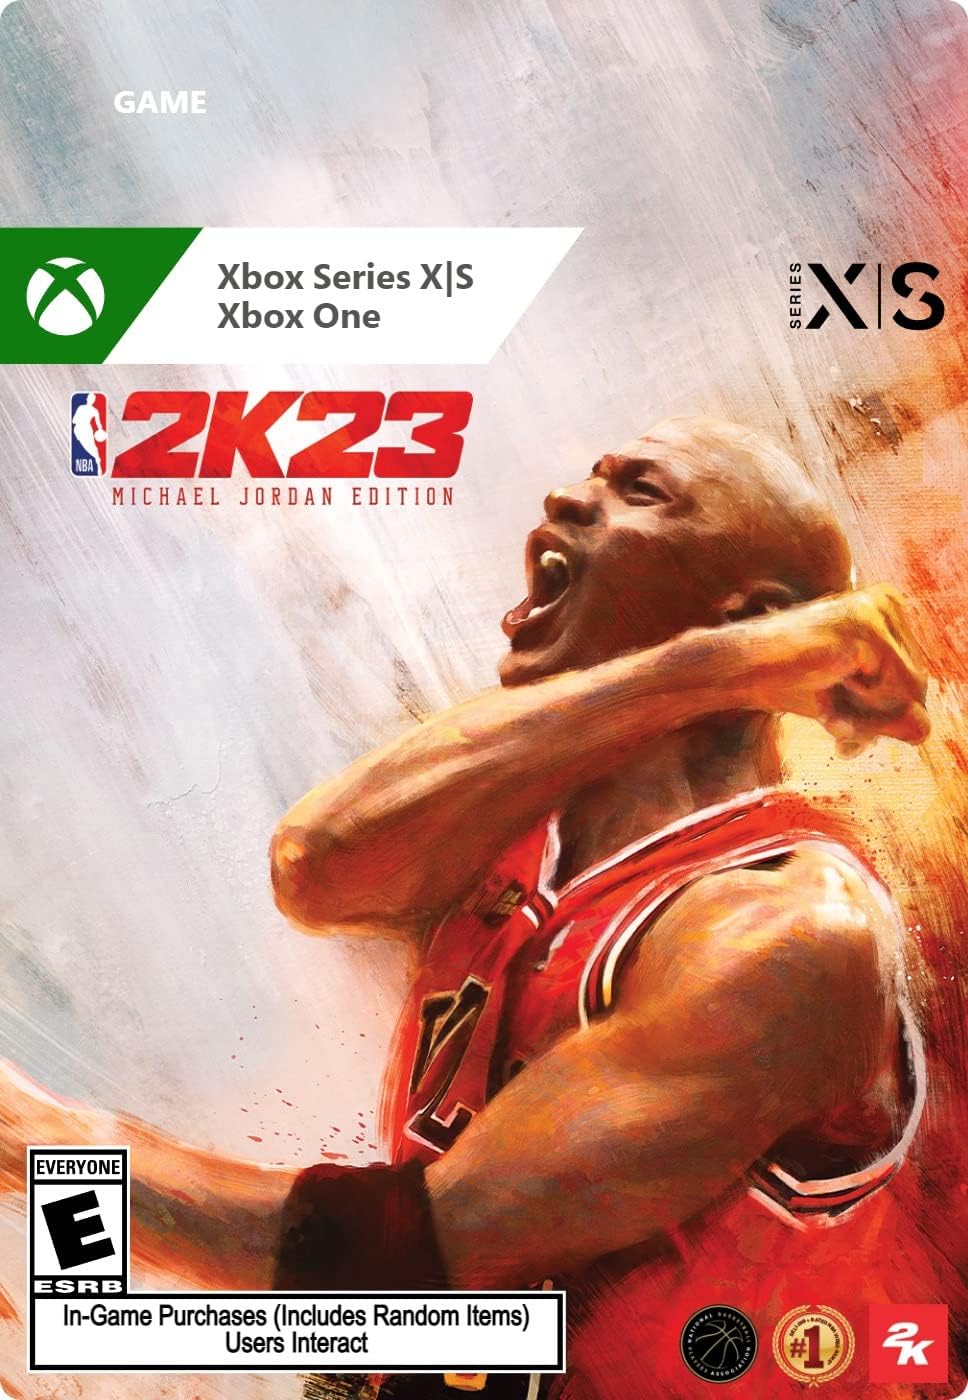 NBA 2K23 Michael Jordan Edition (Xbox Series X|S / One Digital Download) $20